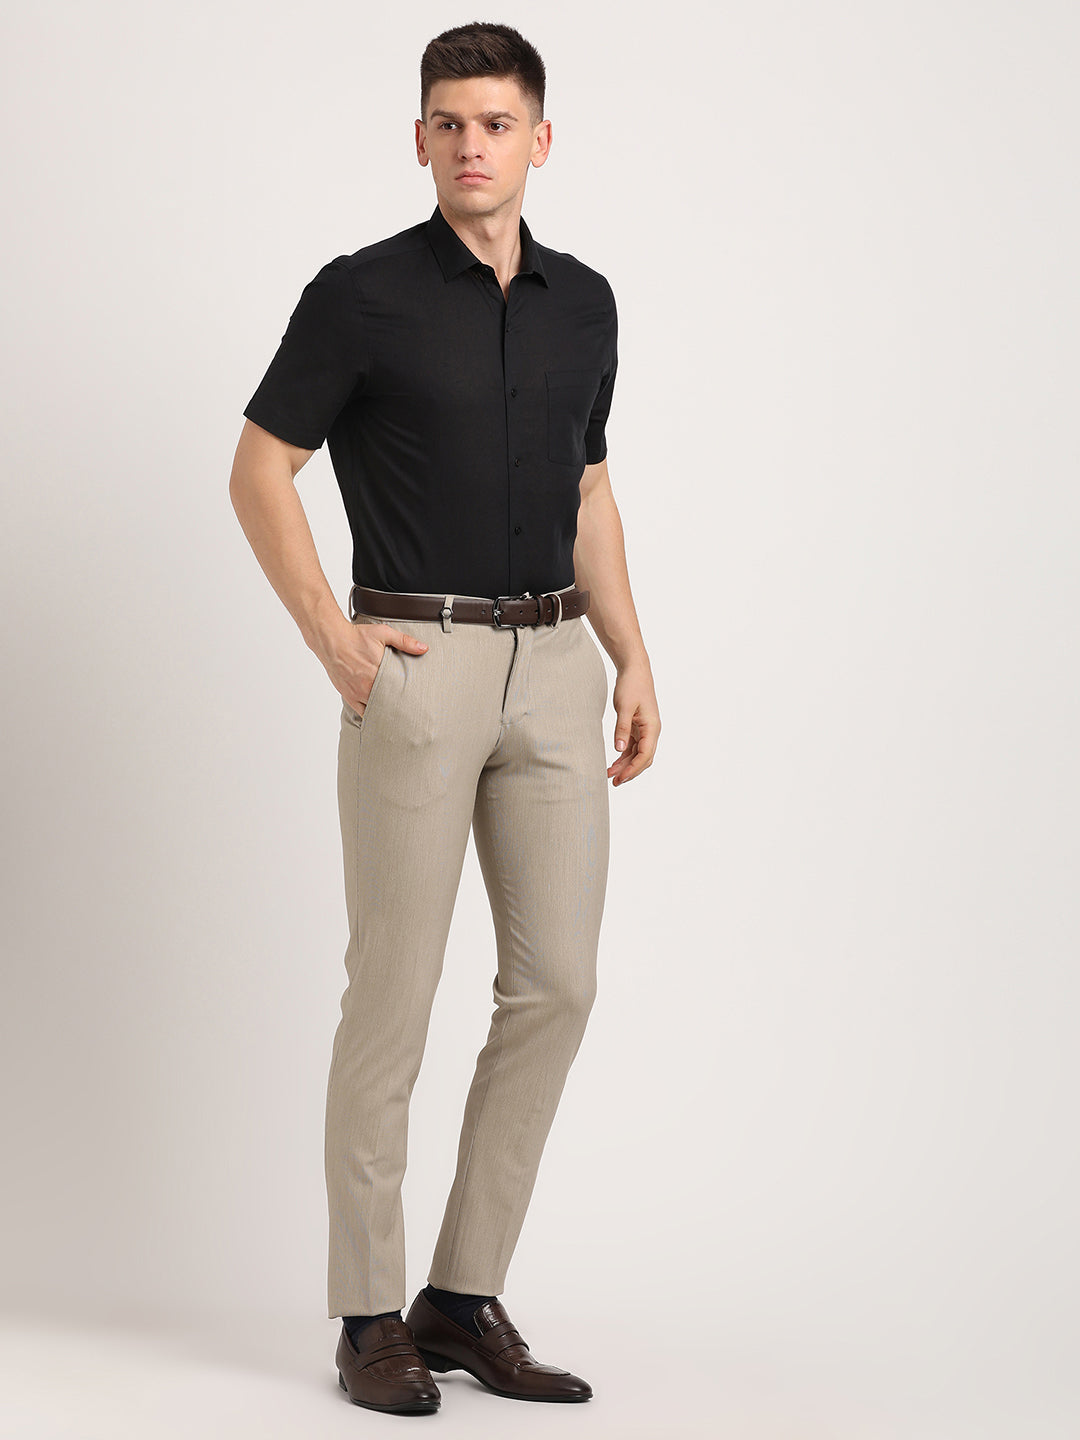 Cotton Linen Black Plain Slim Fit Half Sleeve Formal Shirt